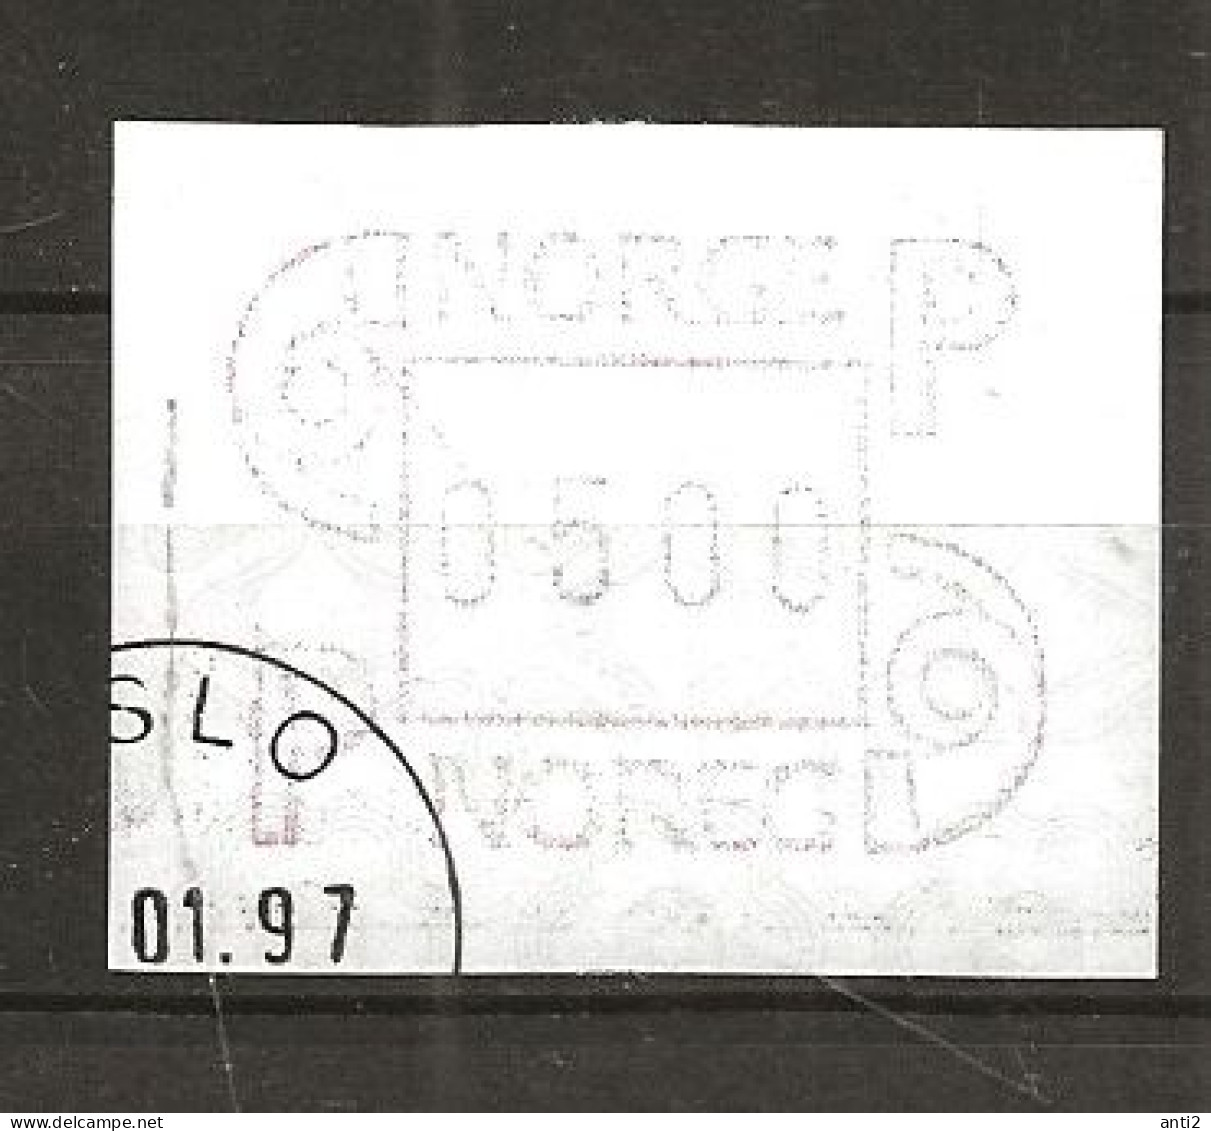 Norway 1997 ATM - Machine Label  NOK 5.00 - Vendel Machine Stamp Mi 3   - Cancelledn January 97 - Timbres De Distributeurs [ATM]